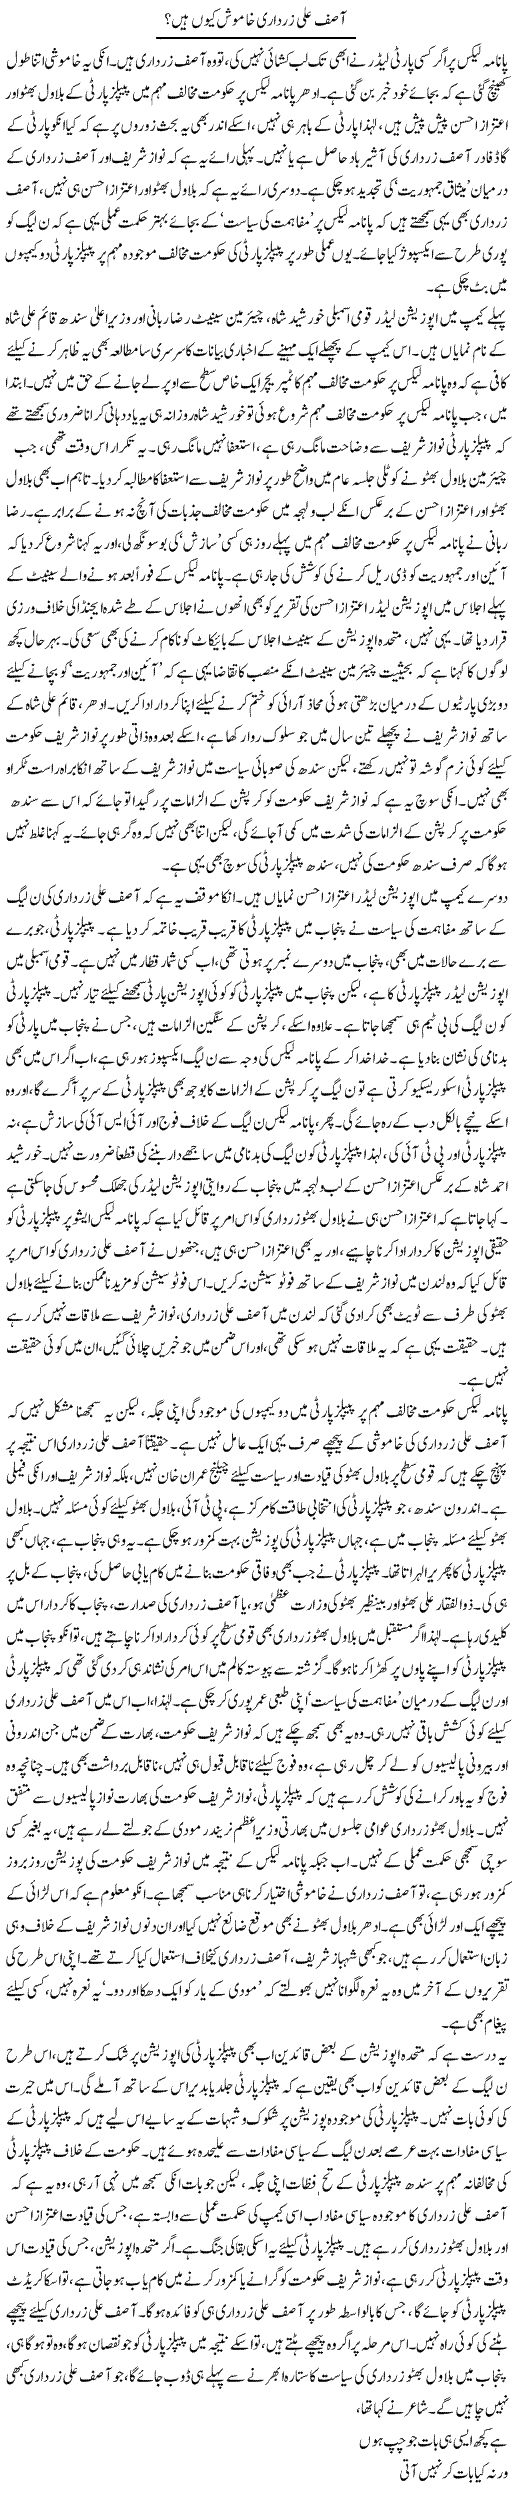 Asif Ali Zardari khamosh kyun hain? | Asghar Abdullah | Daily Urdu Columns